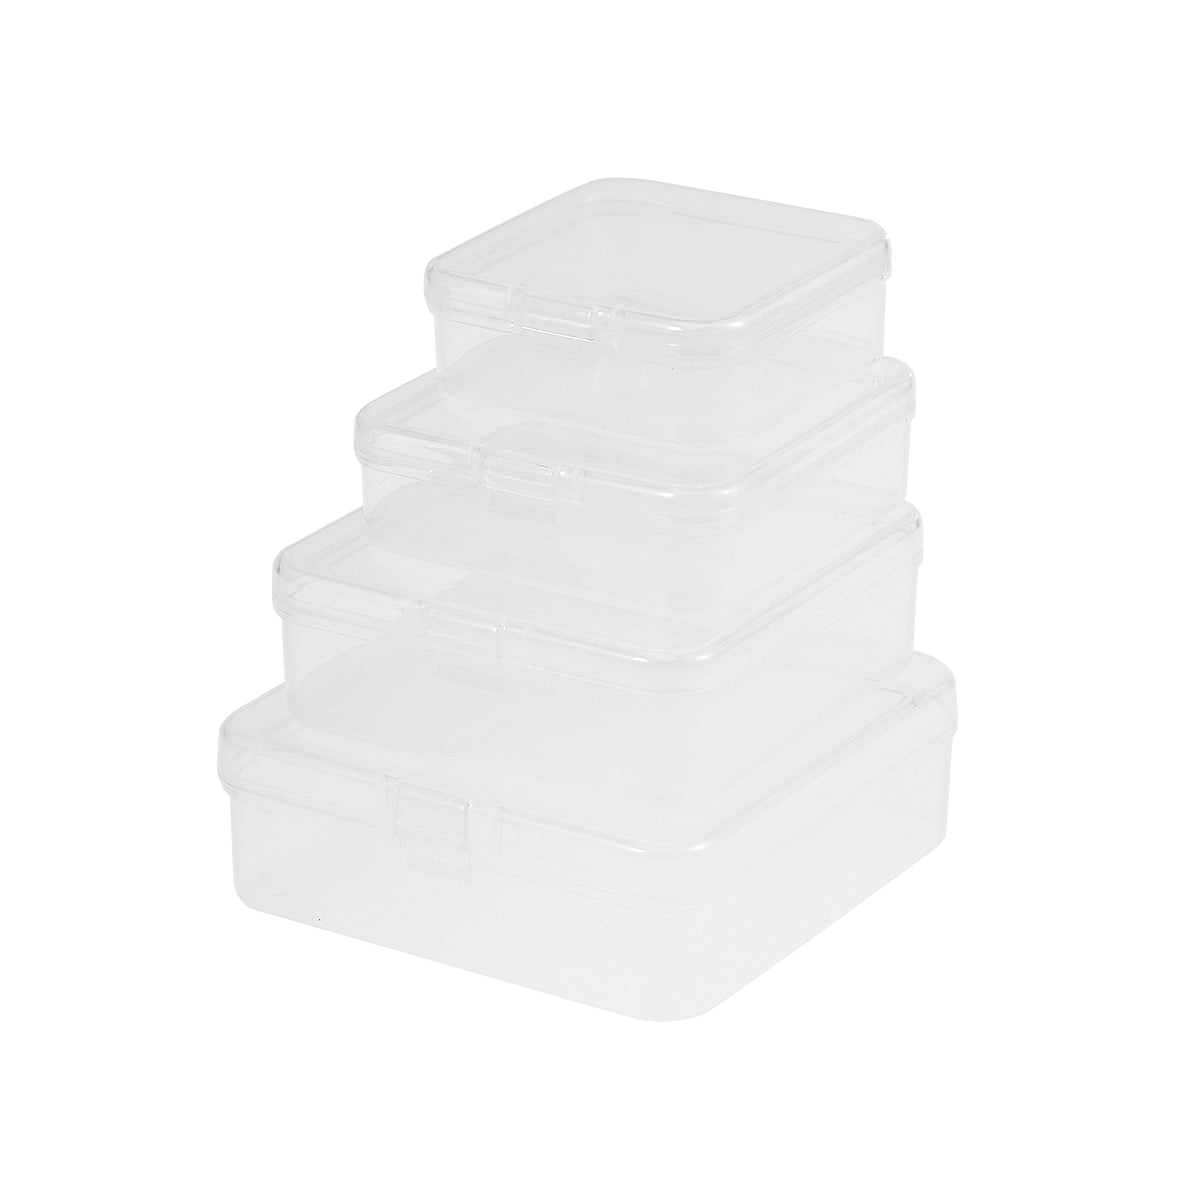 1pc White Plastic Mini Snap Closure Pop-up Round Tabletop Storage